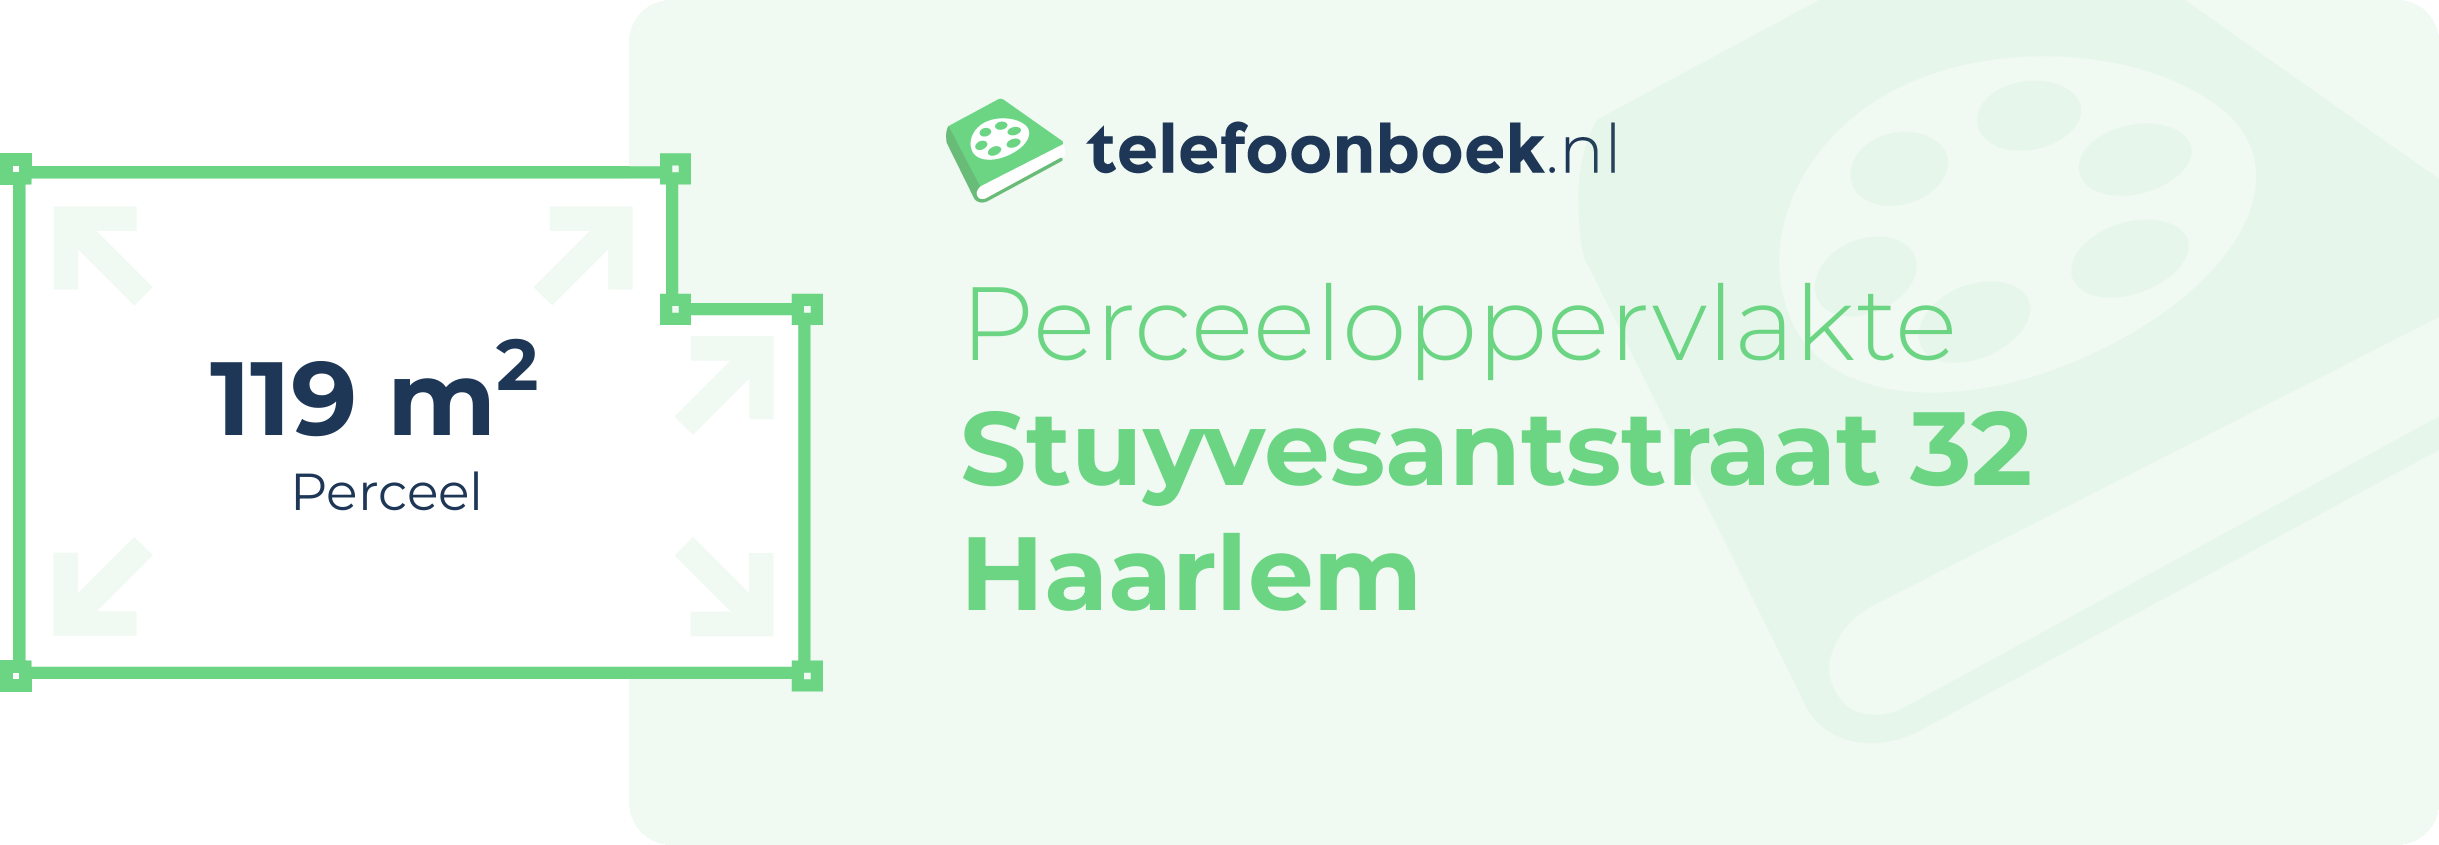 Perceeloppervlakte Stuyvesantstraat 32 Haarlem